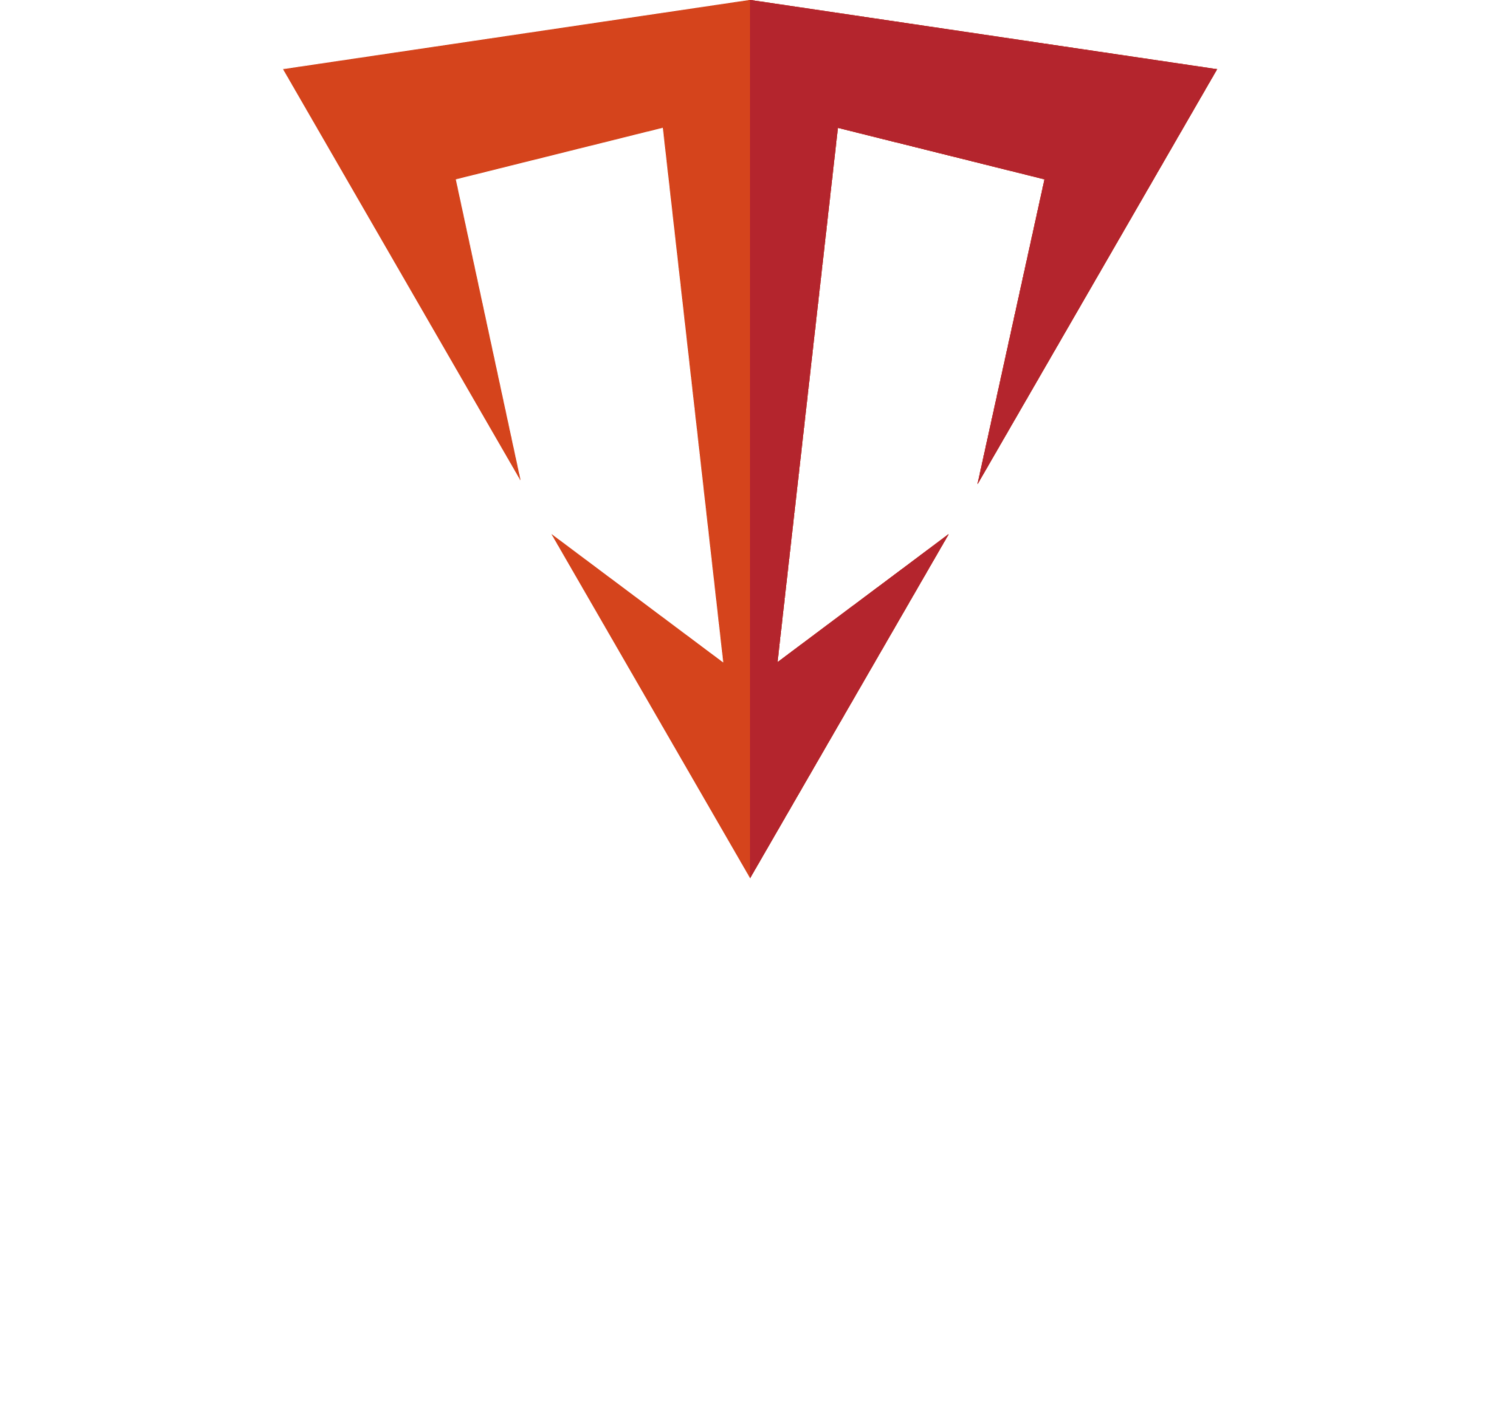 Triton Triangle Logo - Triton Innovation Inc.